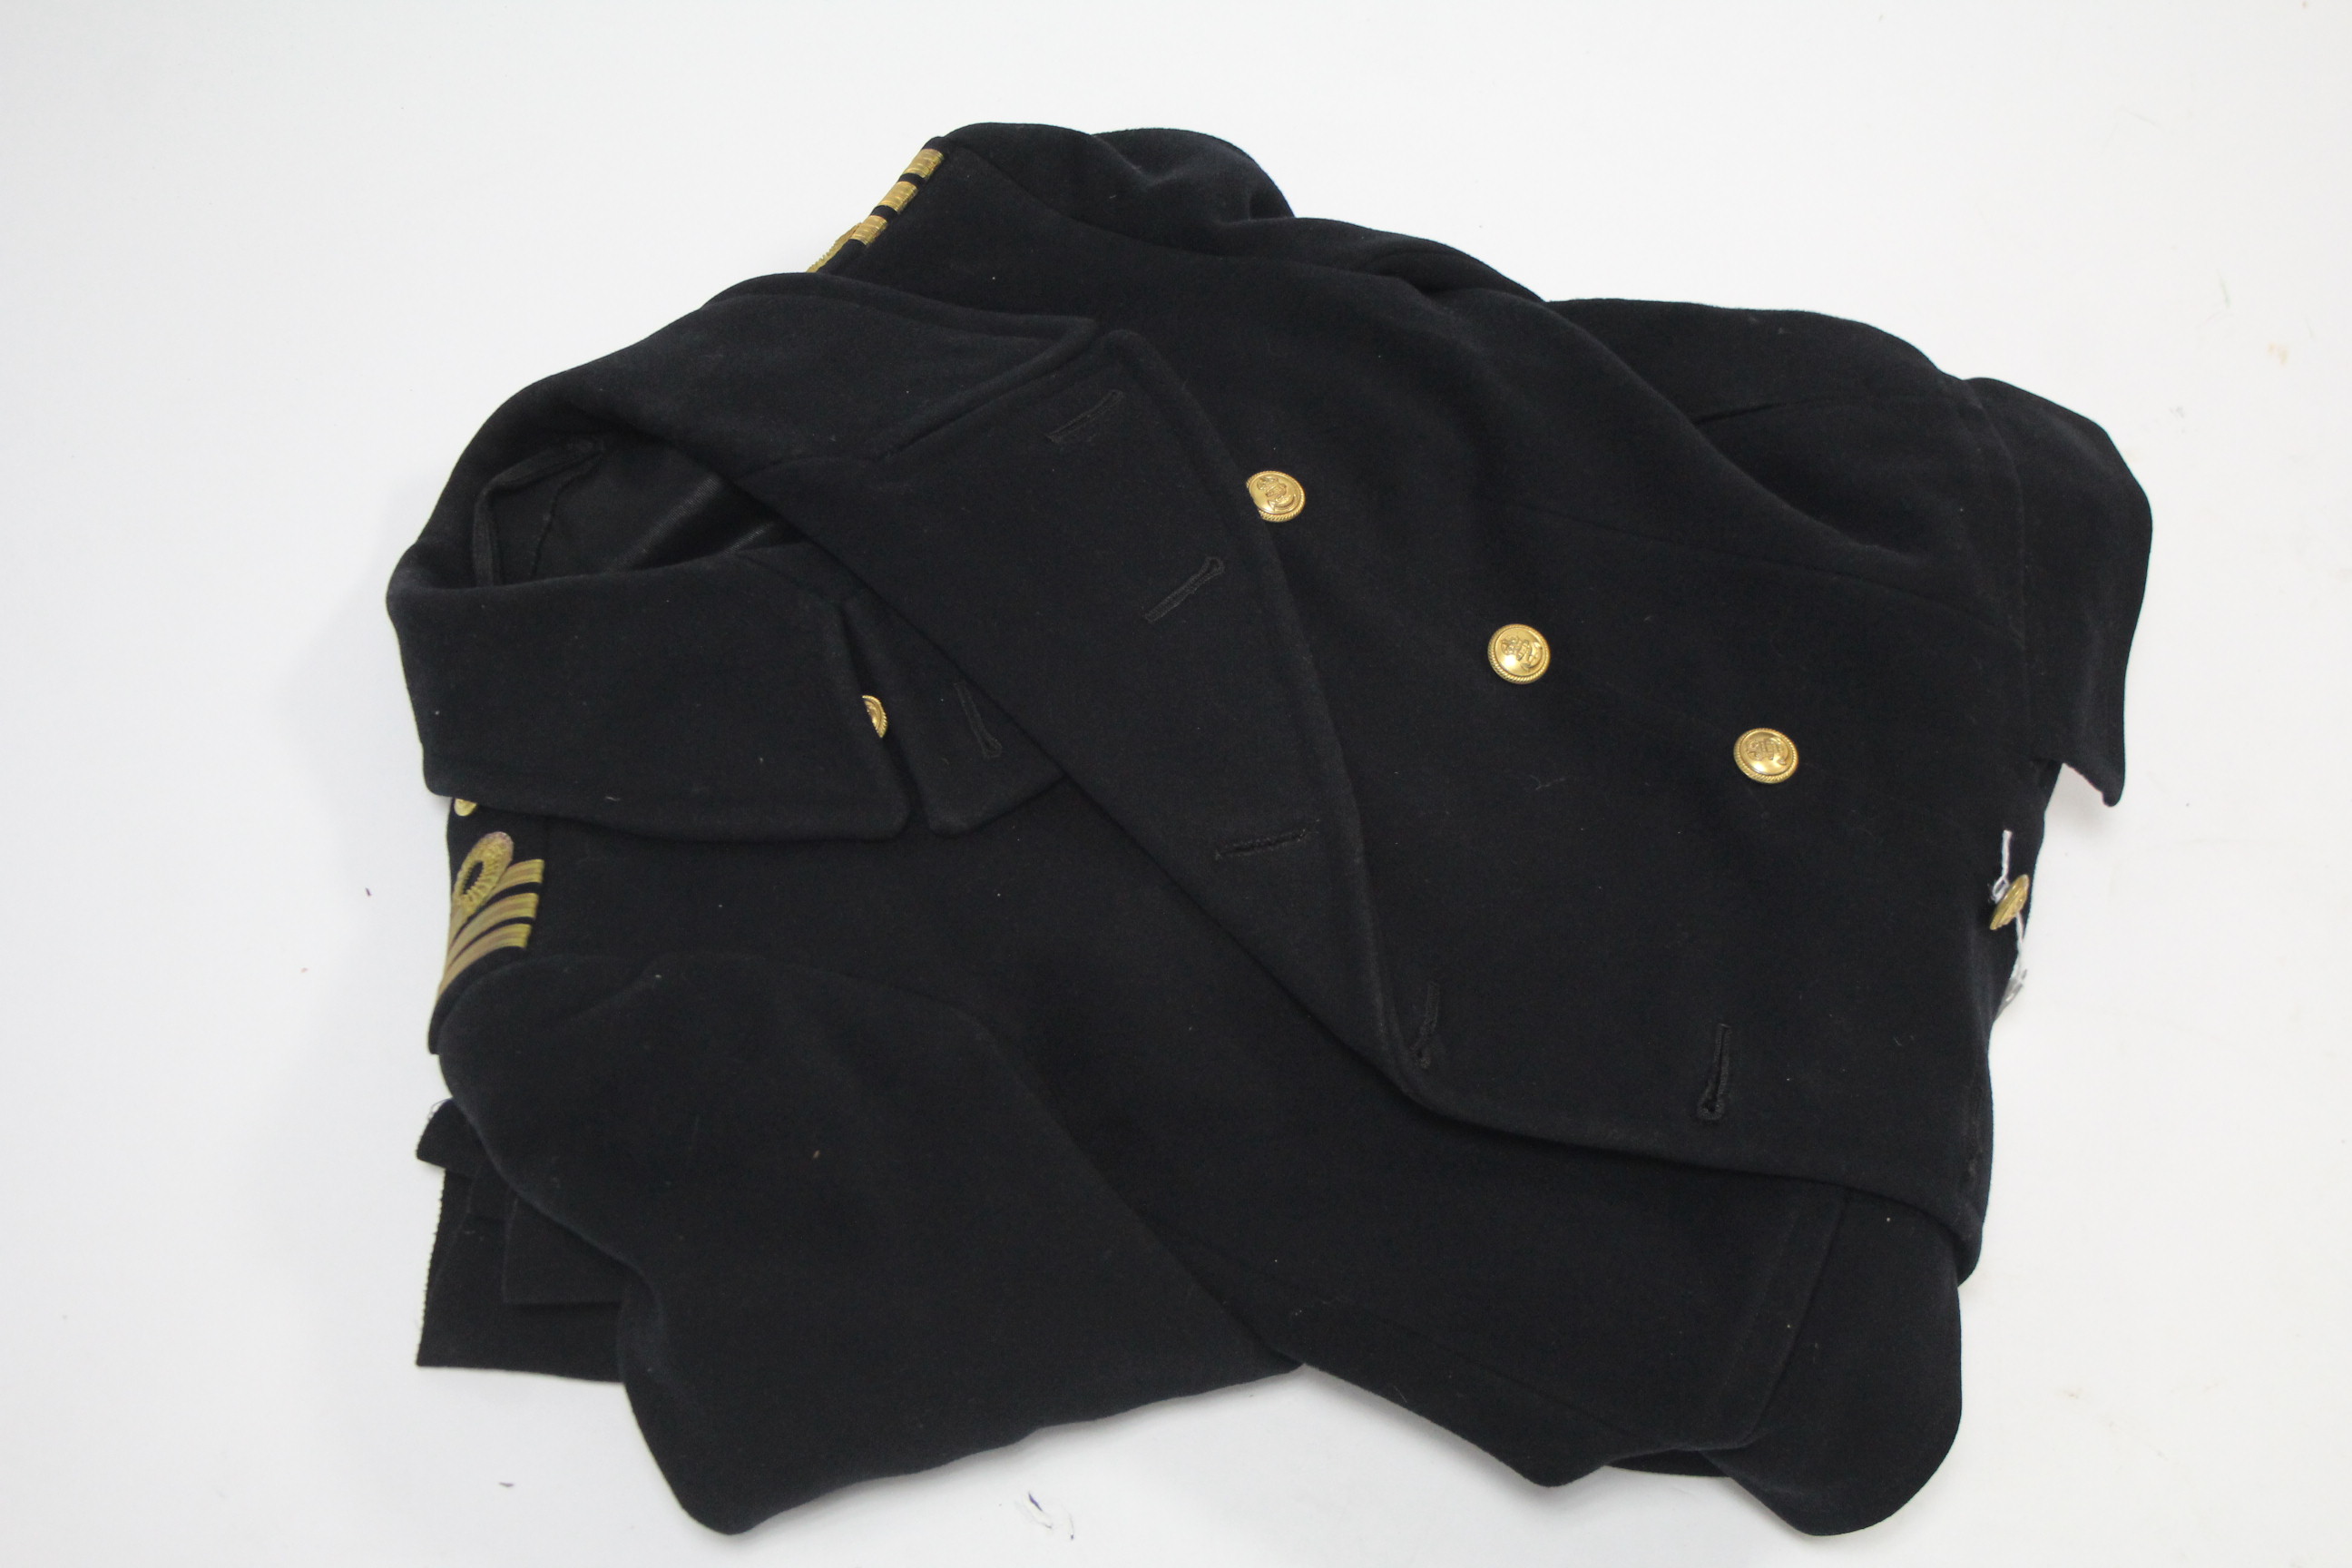 A British Royal Navy commander’s overcoat.